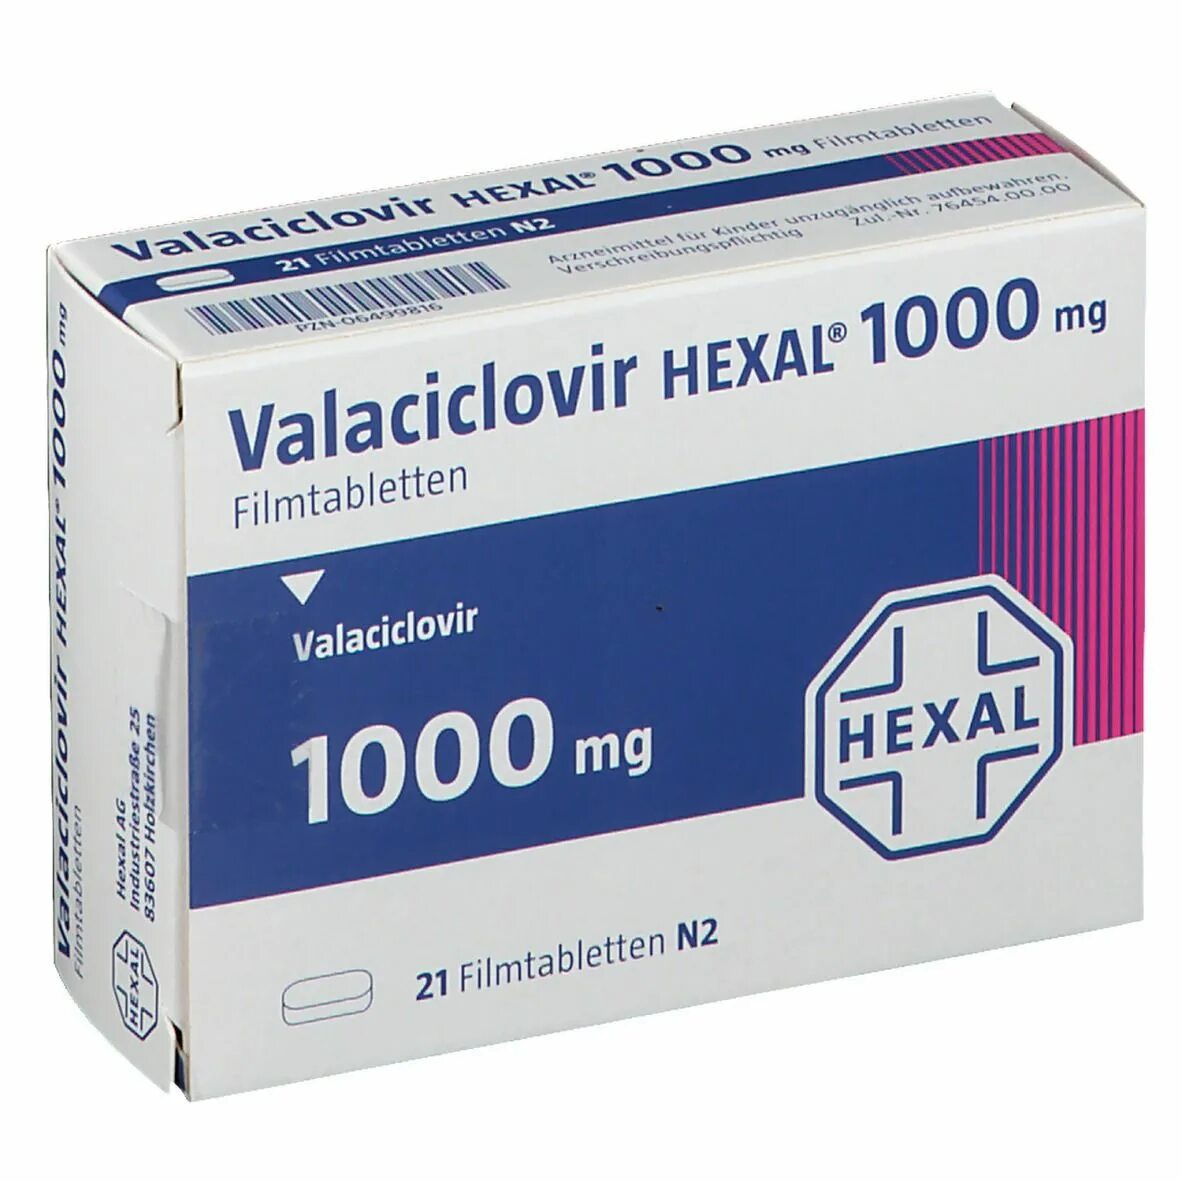 Tamoxifen Hexal Германия 20мг. Валацикловир таблетки 1000 мг. Валацикловир 500. Тамоксифен гексал 20мг.